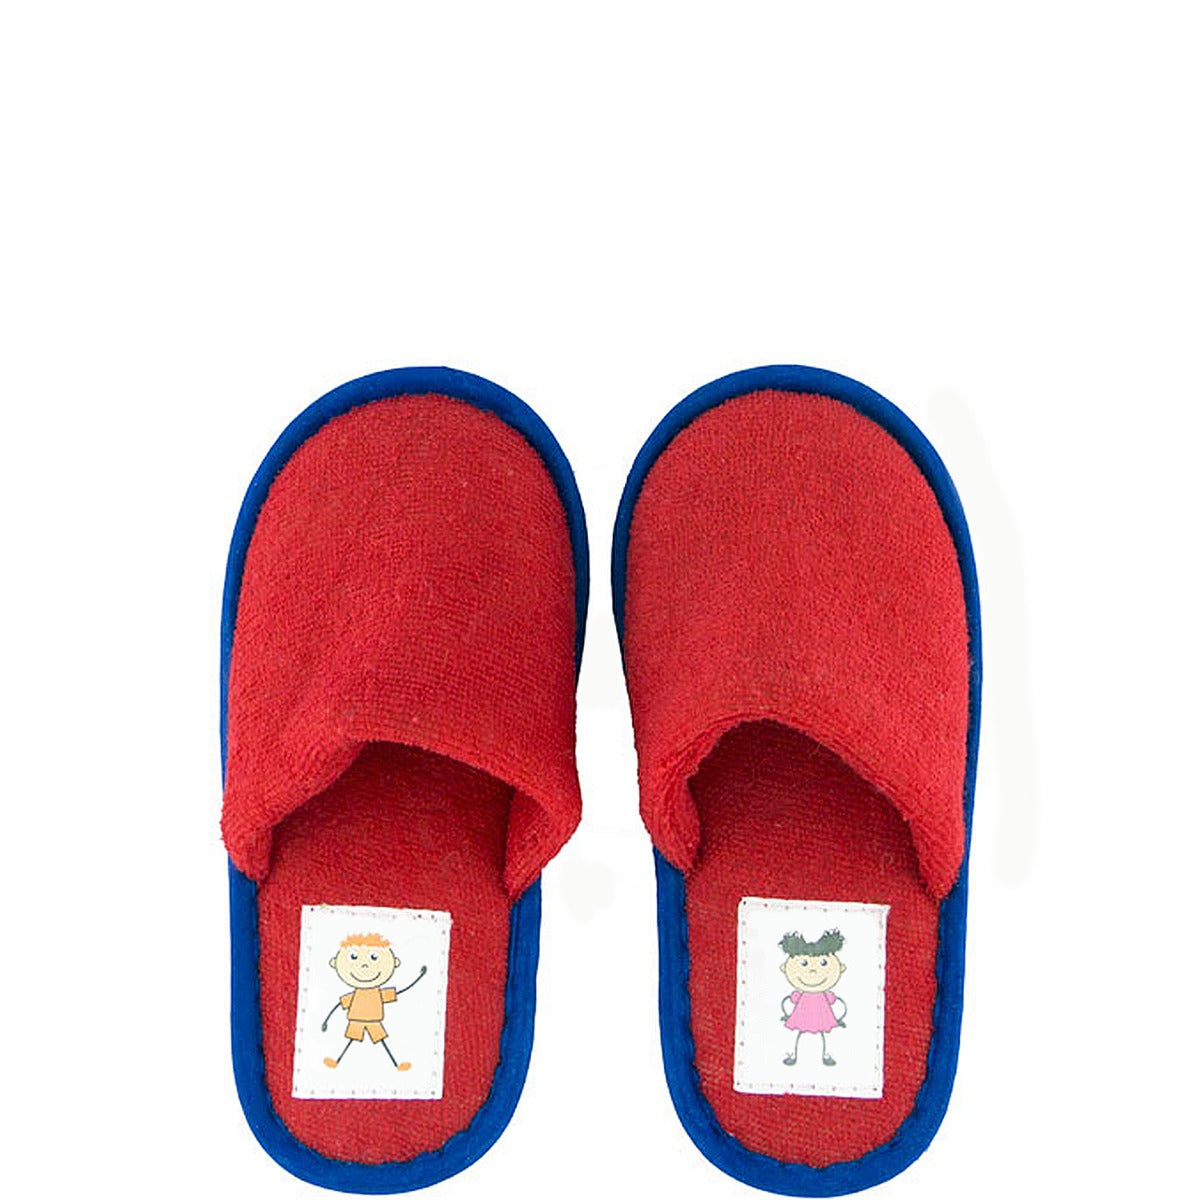 Red slipper - Kids size 27  17cm